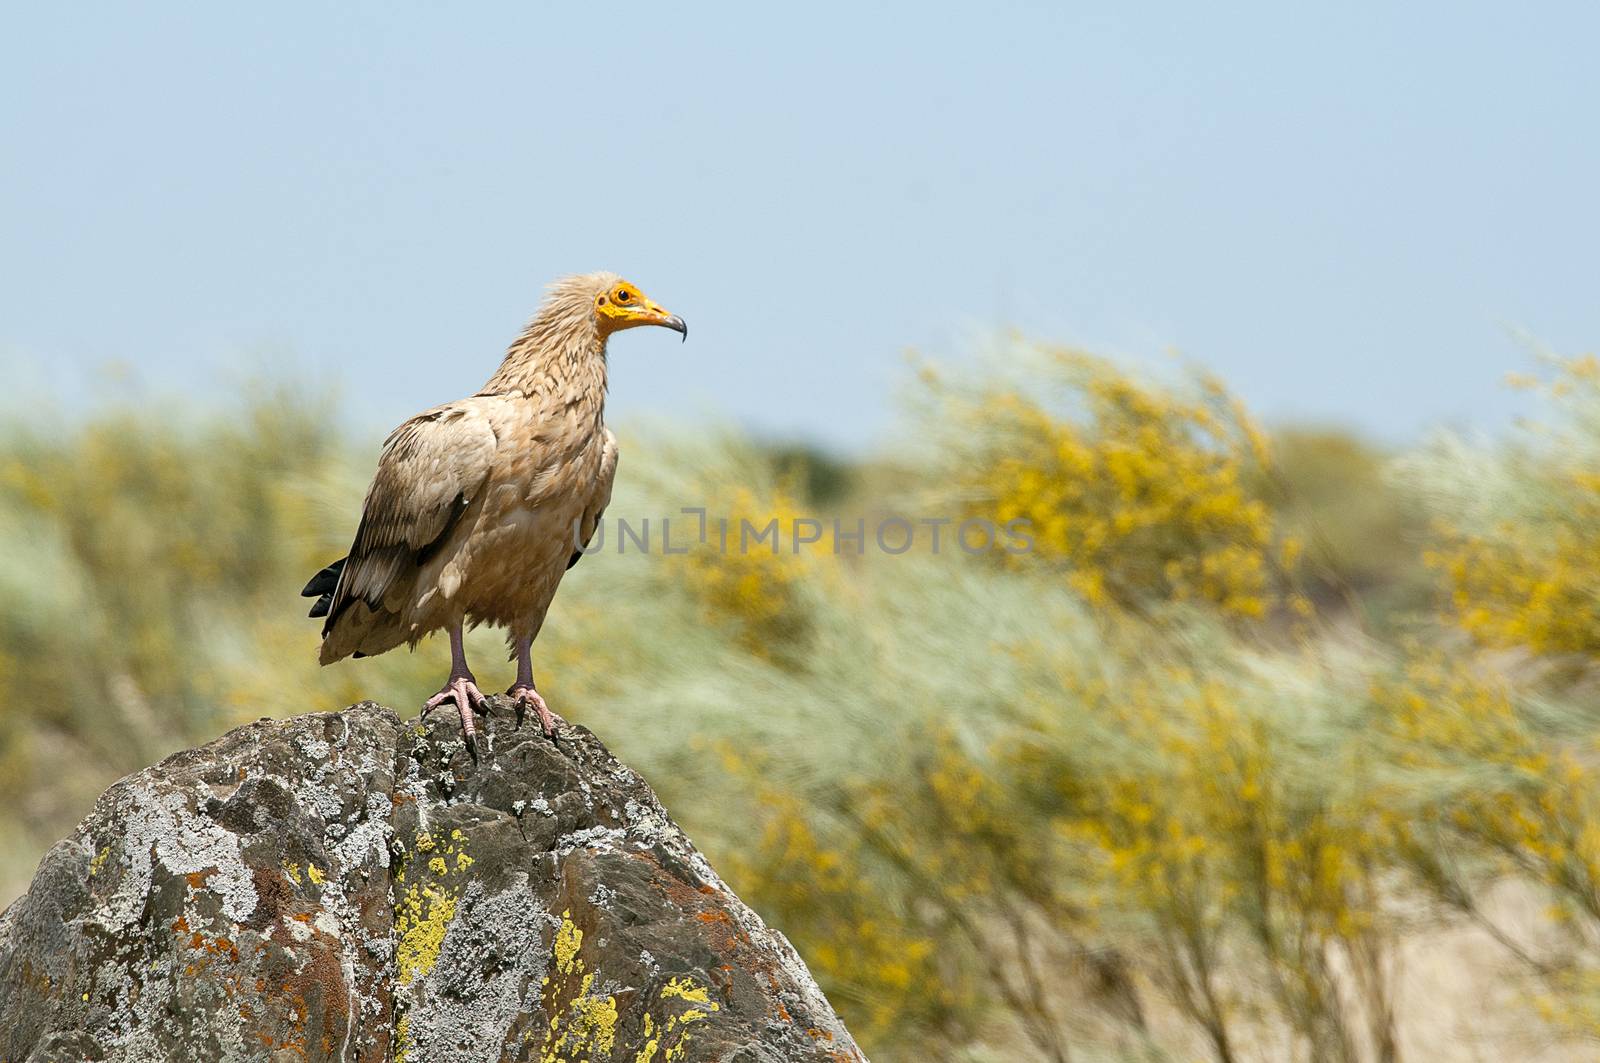 Egyptian Vulture (Neophron percnopterus), spain, portrait perche by jalonsohu@gmail.com